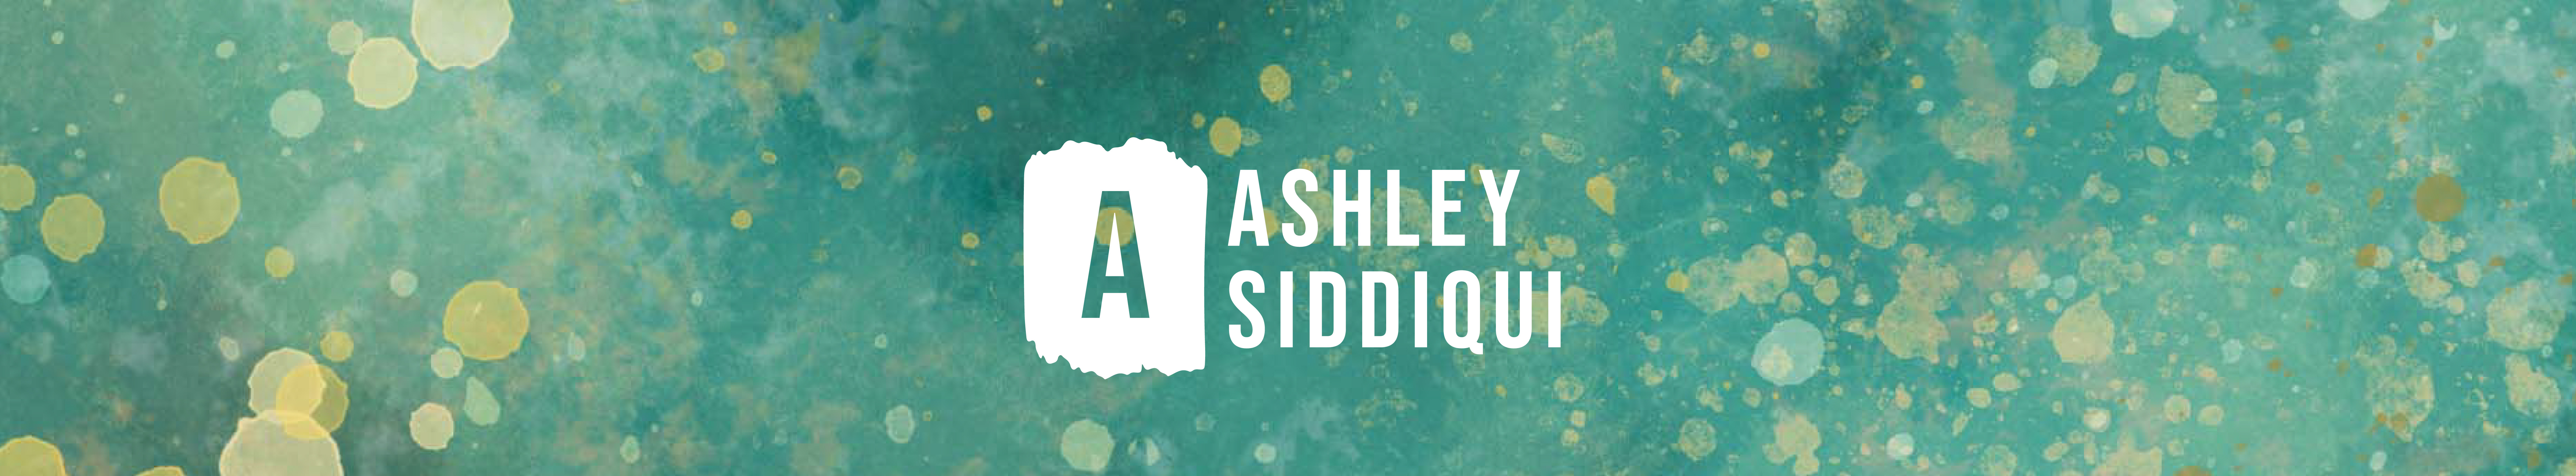 Ashley Siddiqui's profile banner